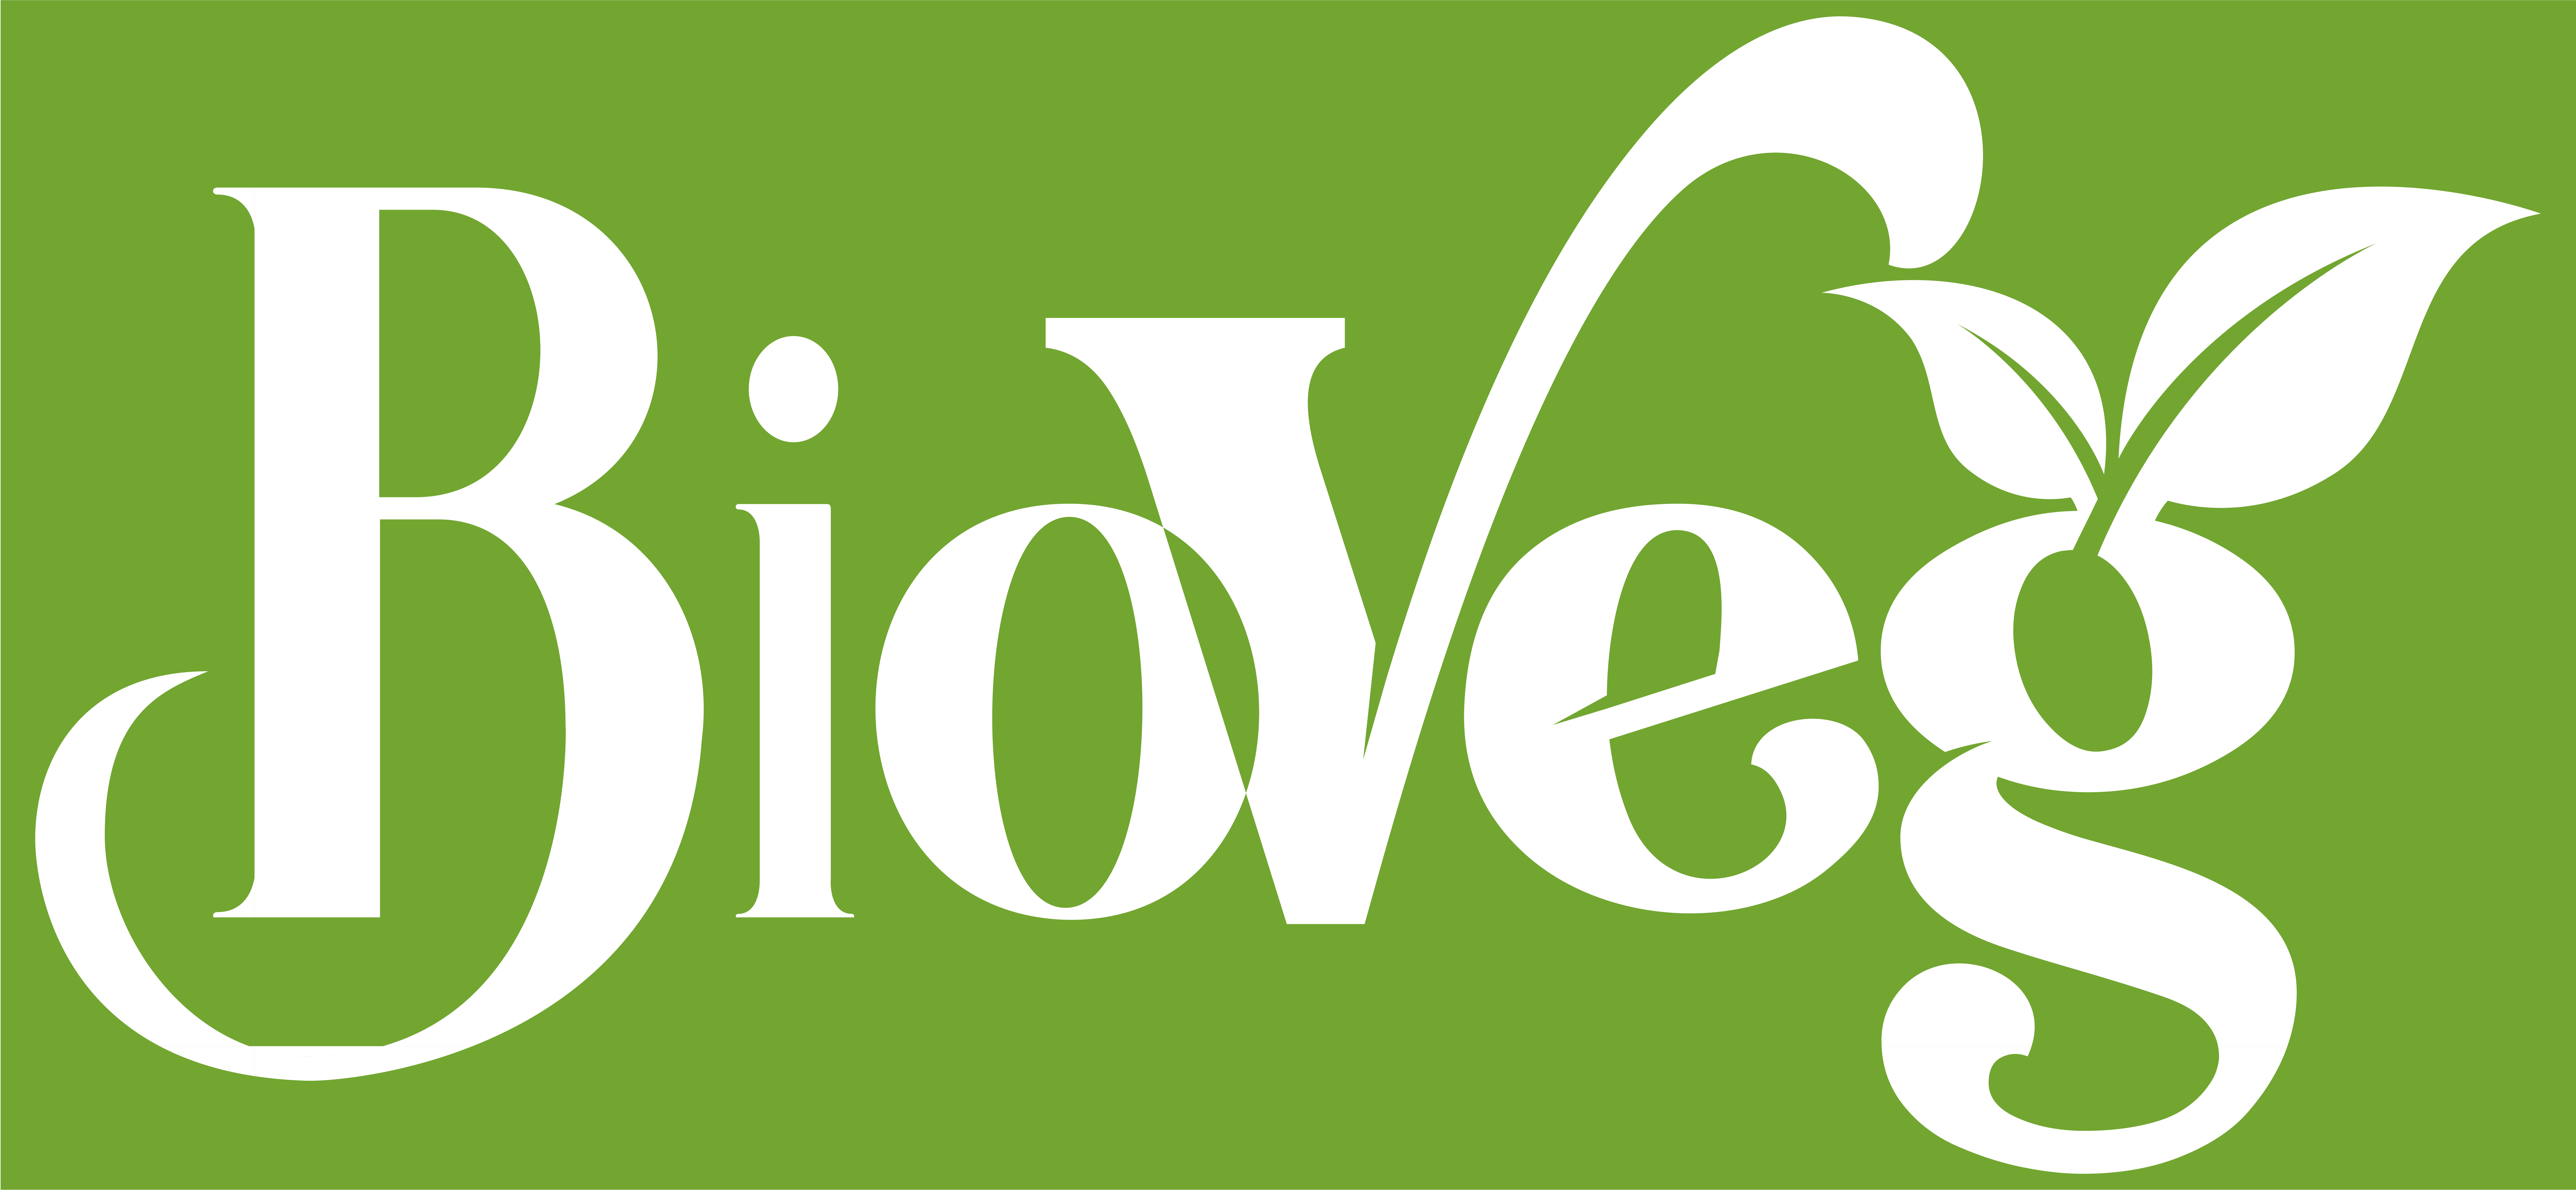 Bine ați venit la BioVeg, magazinul dvs. online de produse bio! ❤️